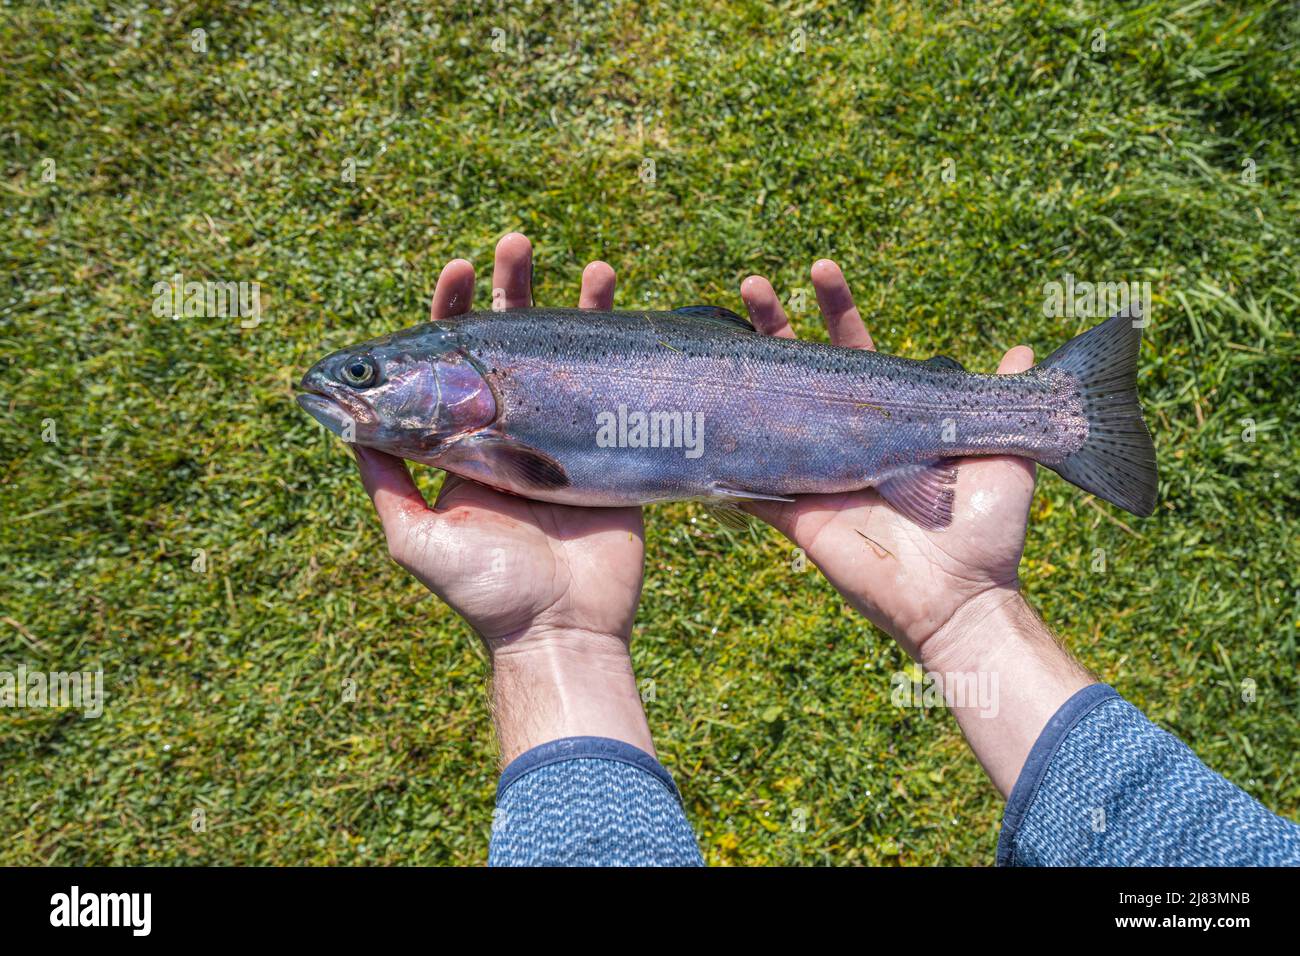 https://c8.alamy.com/comp/2J83MNB/hands-holding-a-caught-trout-fishing-edible-fish-2J83MNB.jpg